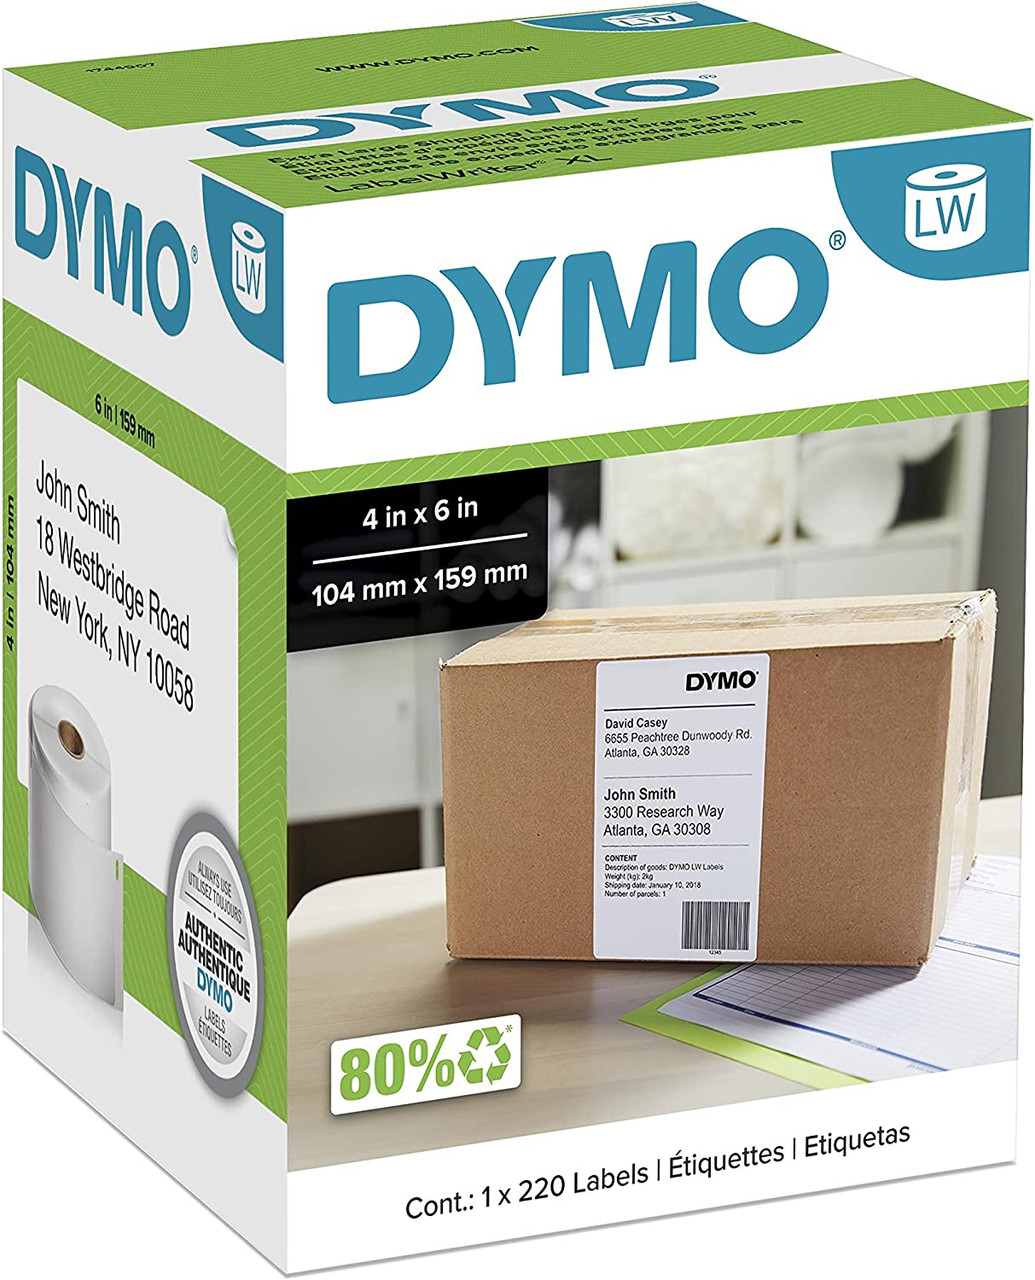 Dymo 1744907 4x6 Shipping Labels